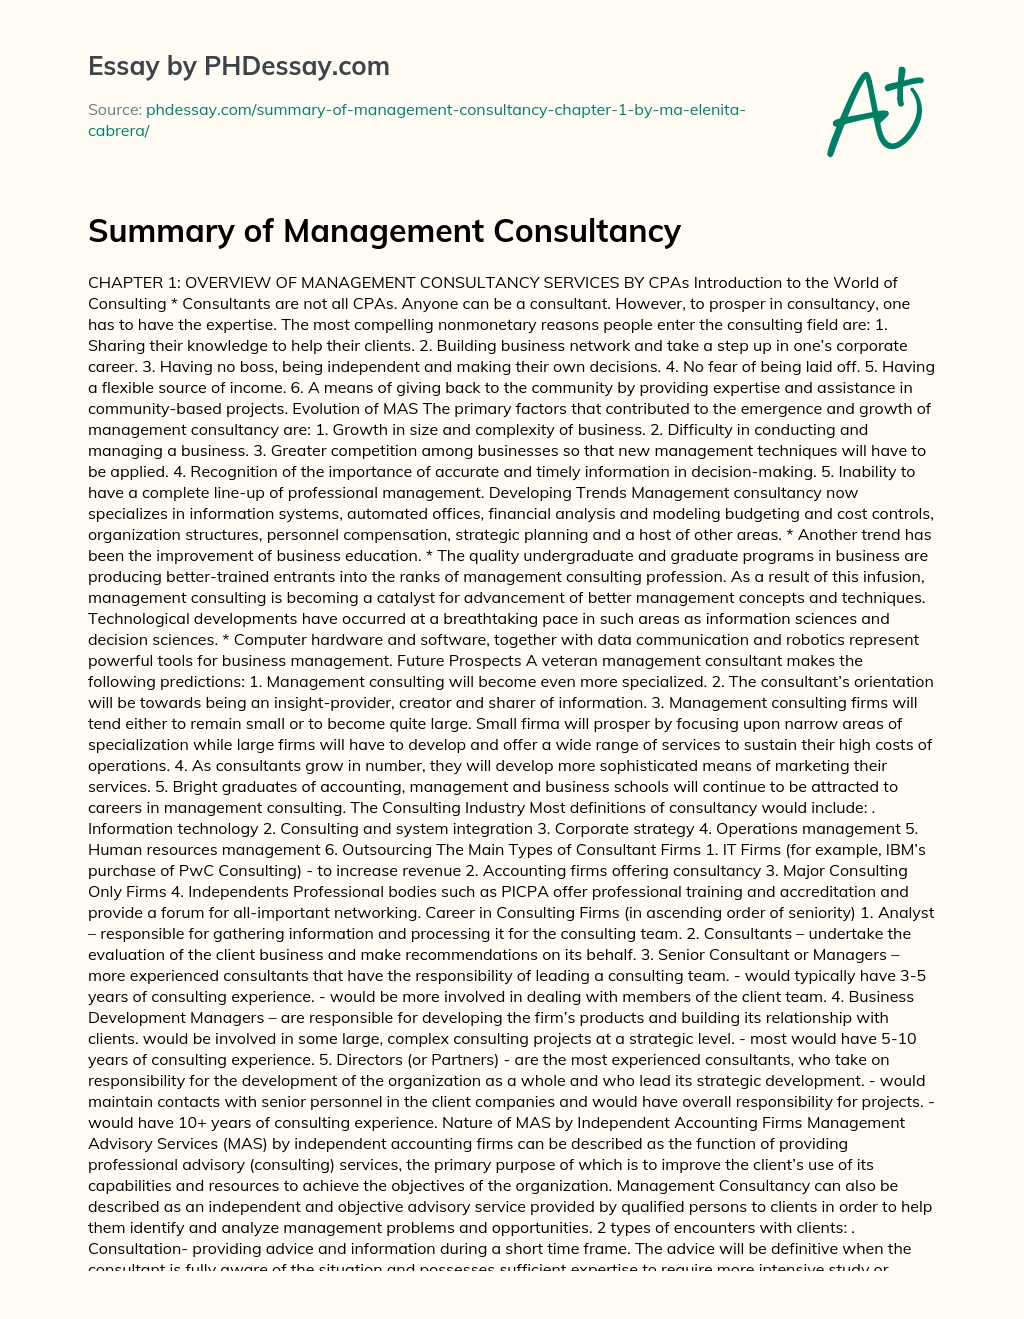 Summary of Management Consultancy essay